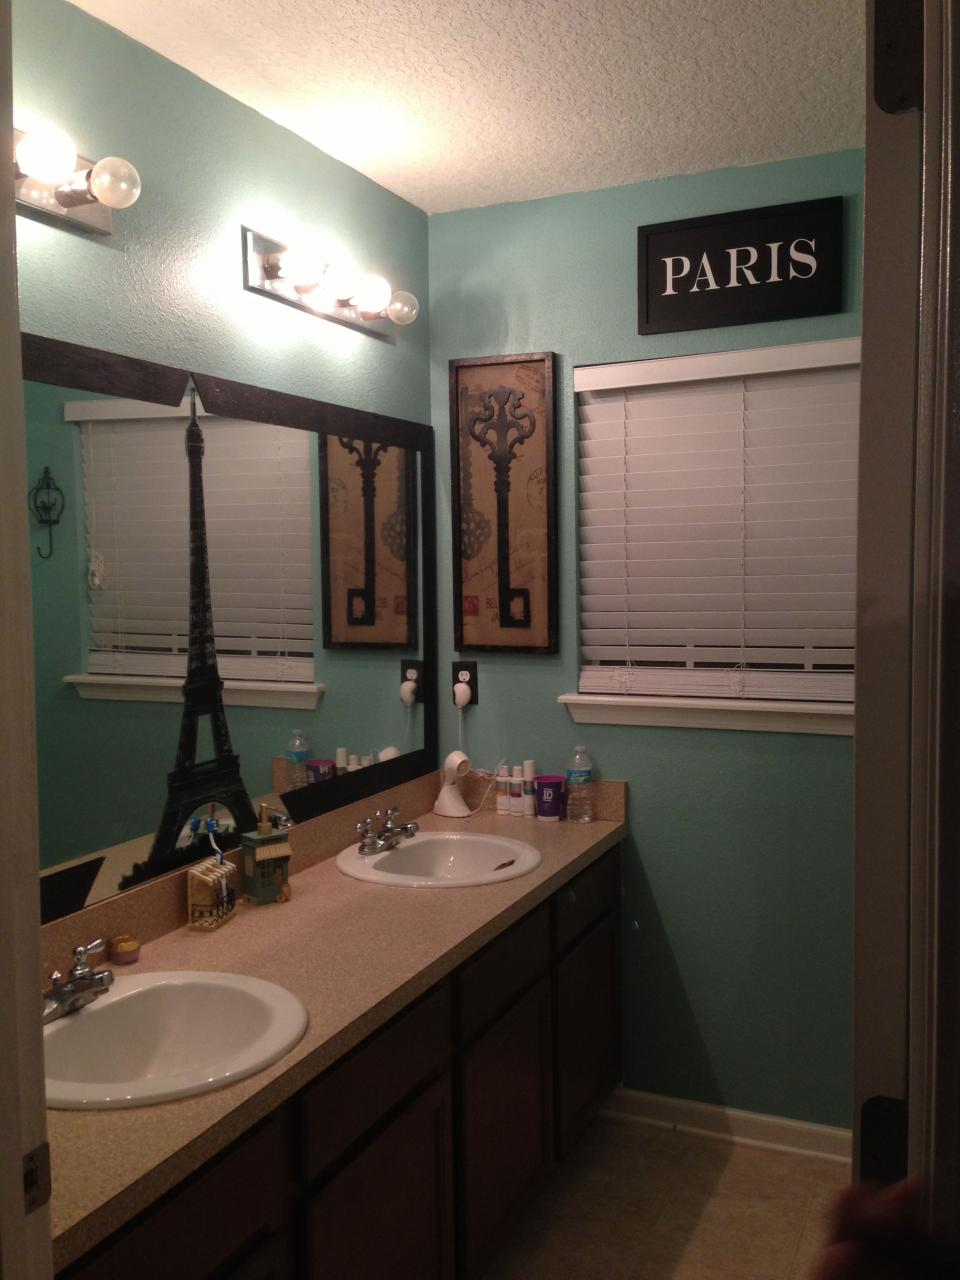 Our Paris inspired bathroom Master bedroom bathroom, Paris bathroom